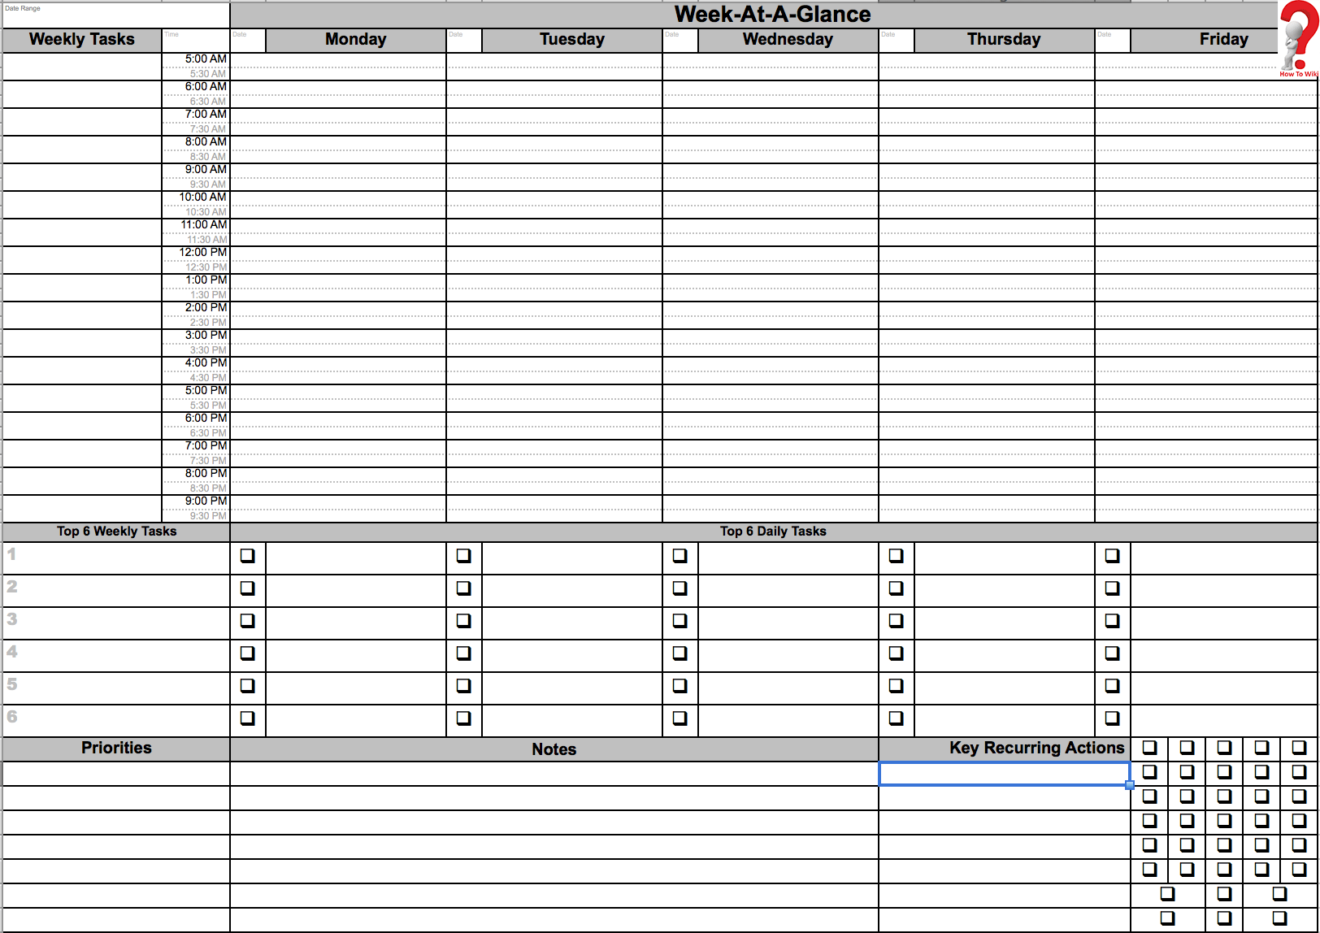 weekly work schedule template pdf